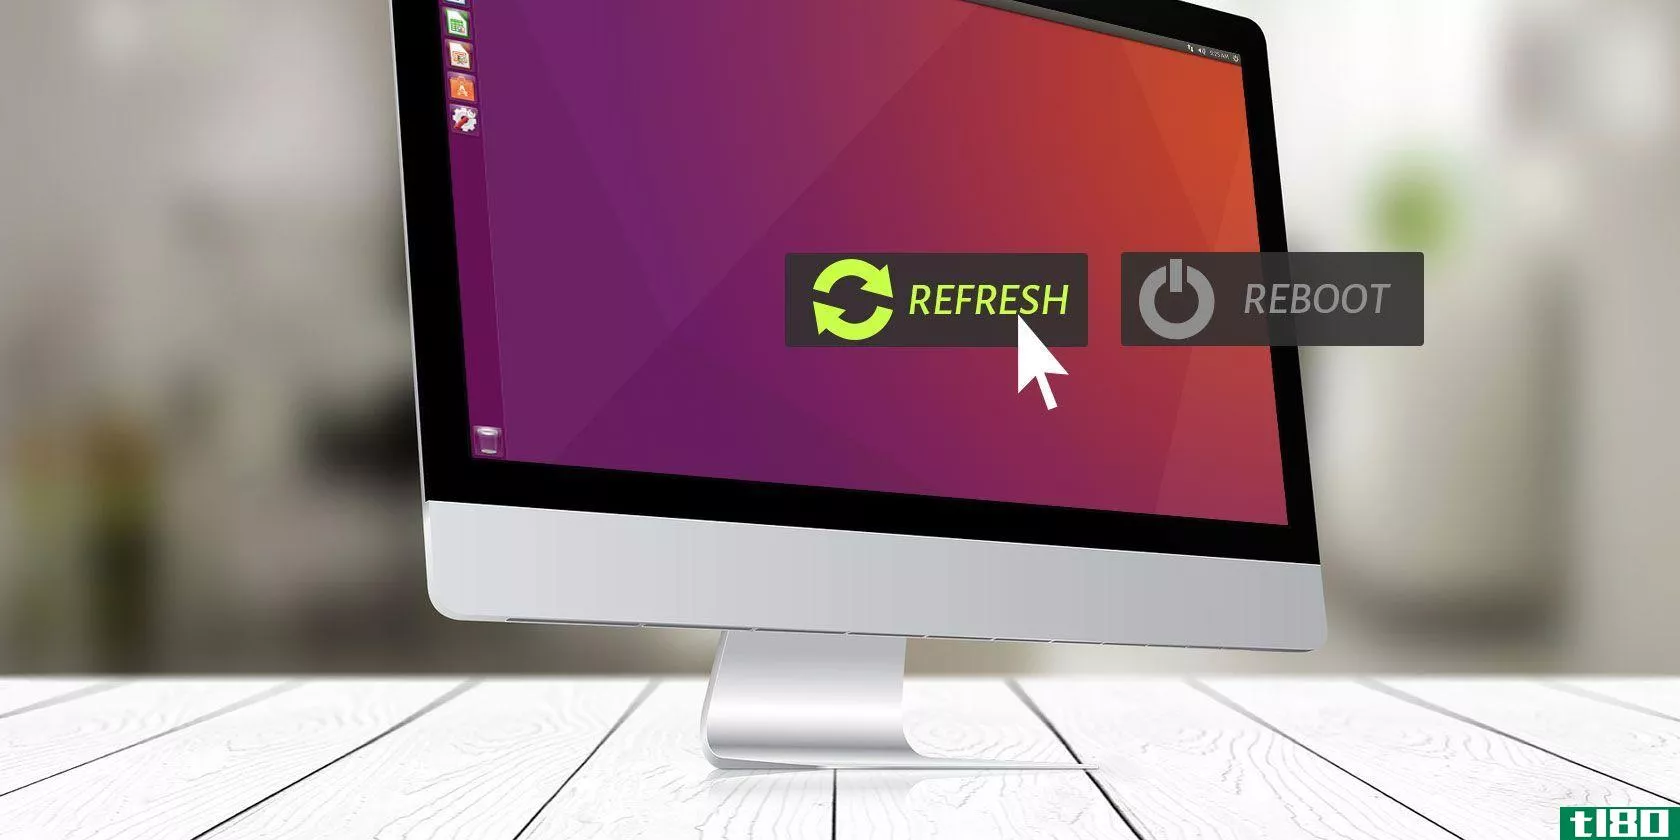 linux-refresh-not-reboot